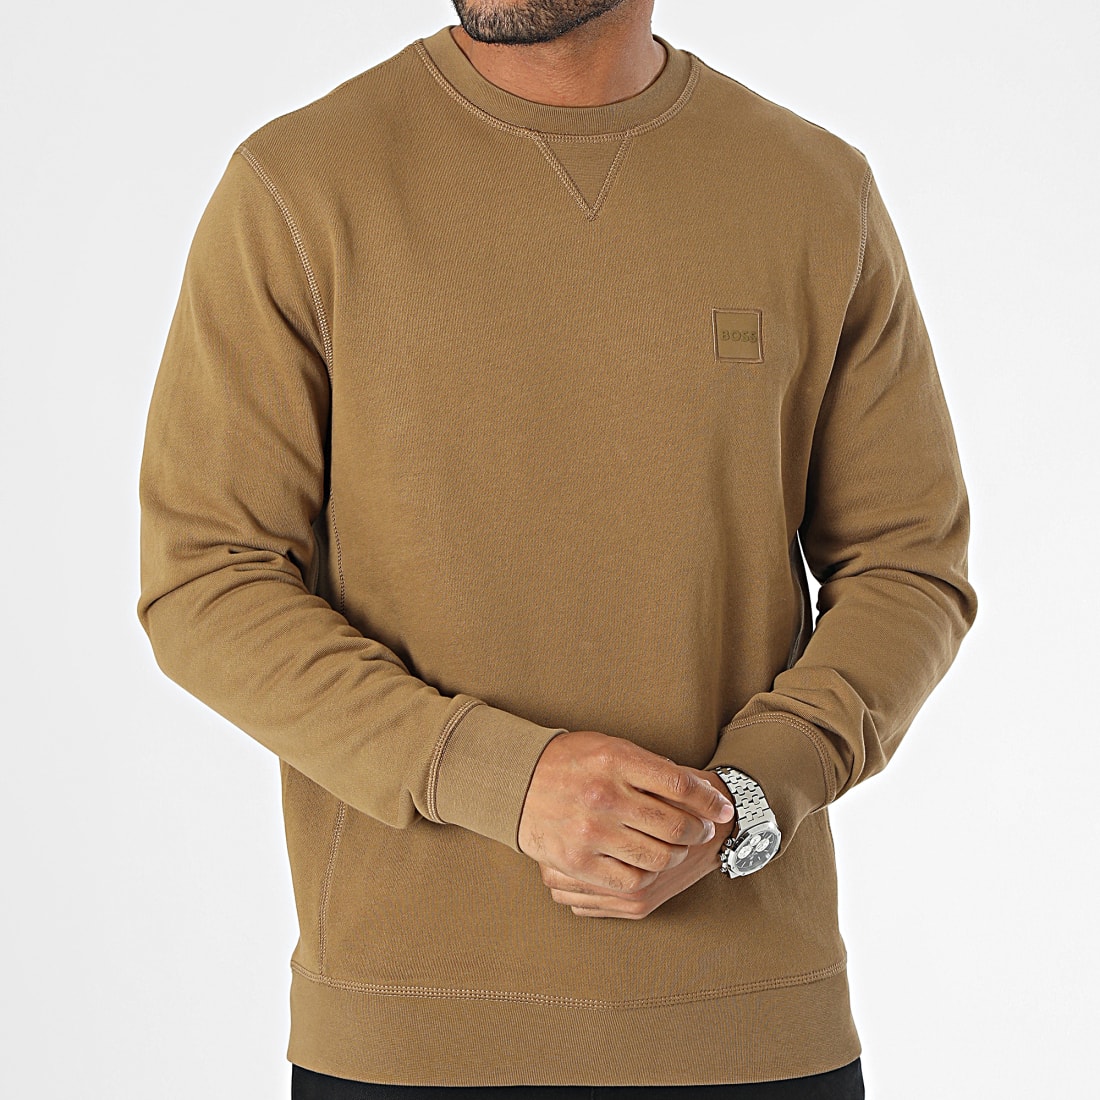 Hugo Boss Westart Sweatshirt (50468443) au meilleur prix sur